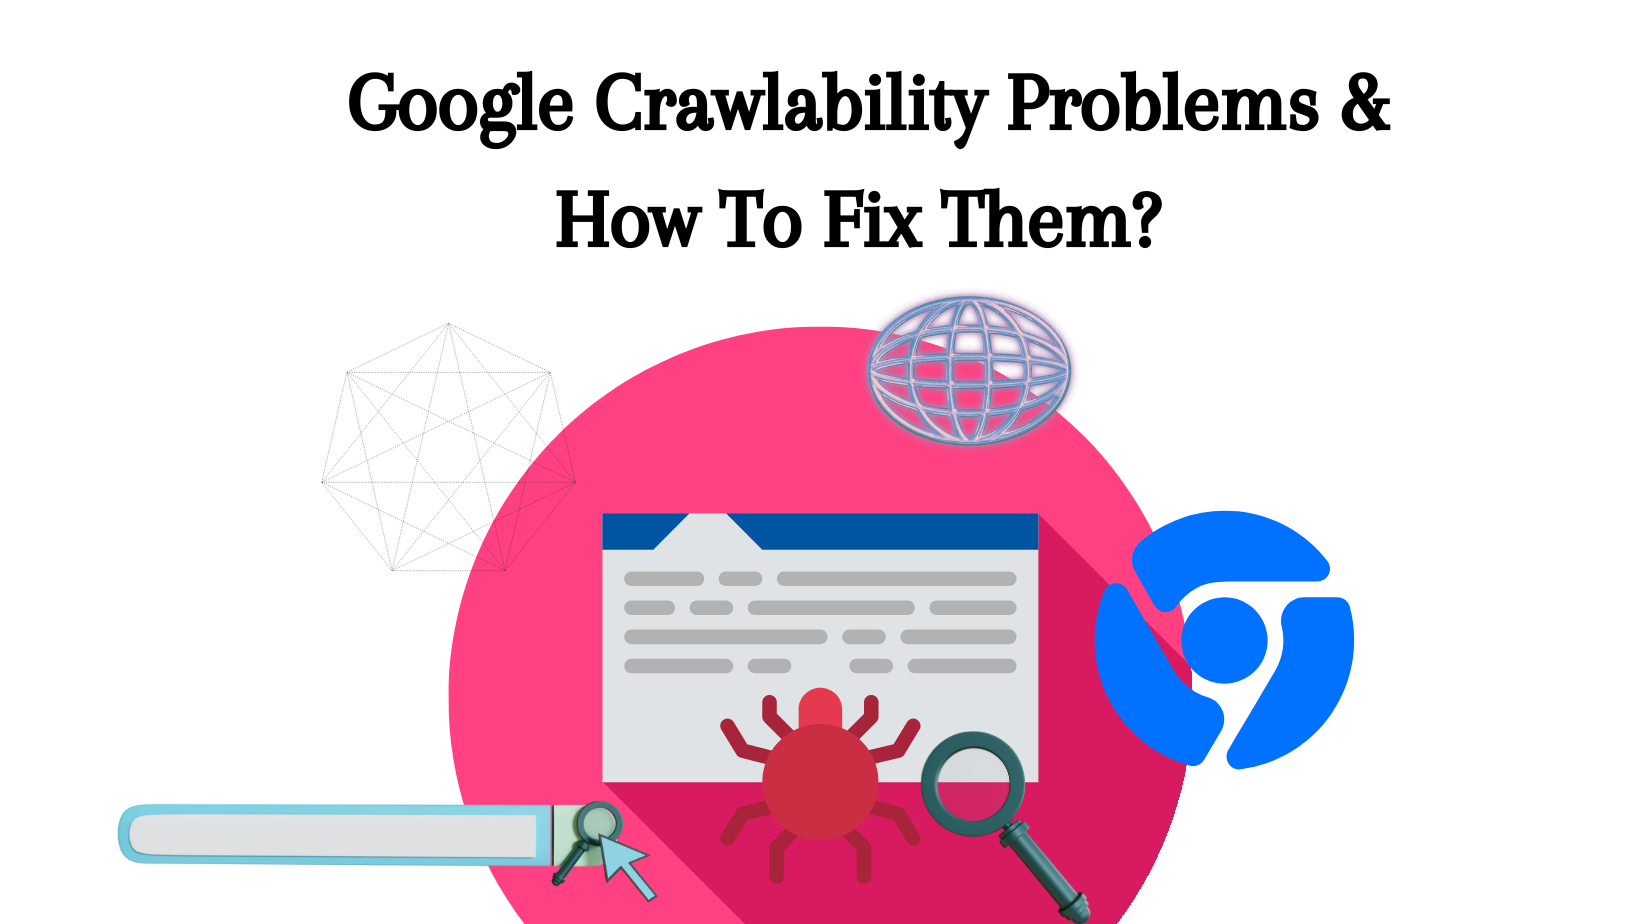 _Google Crawlability Problems & How To Fix Them